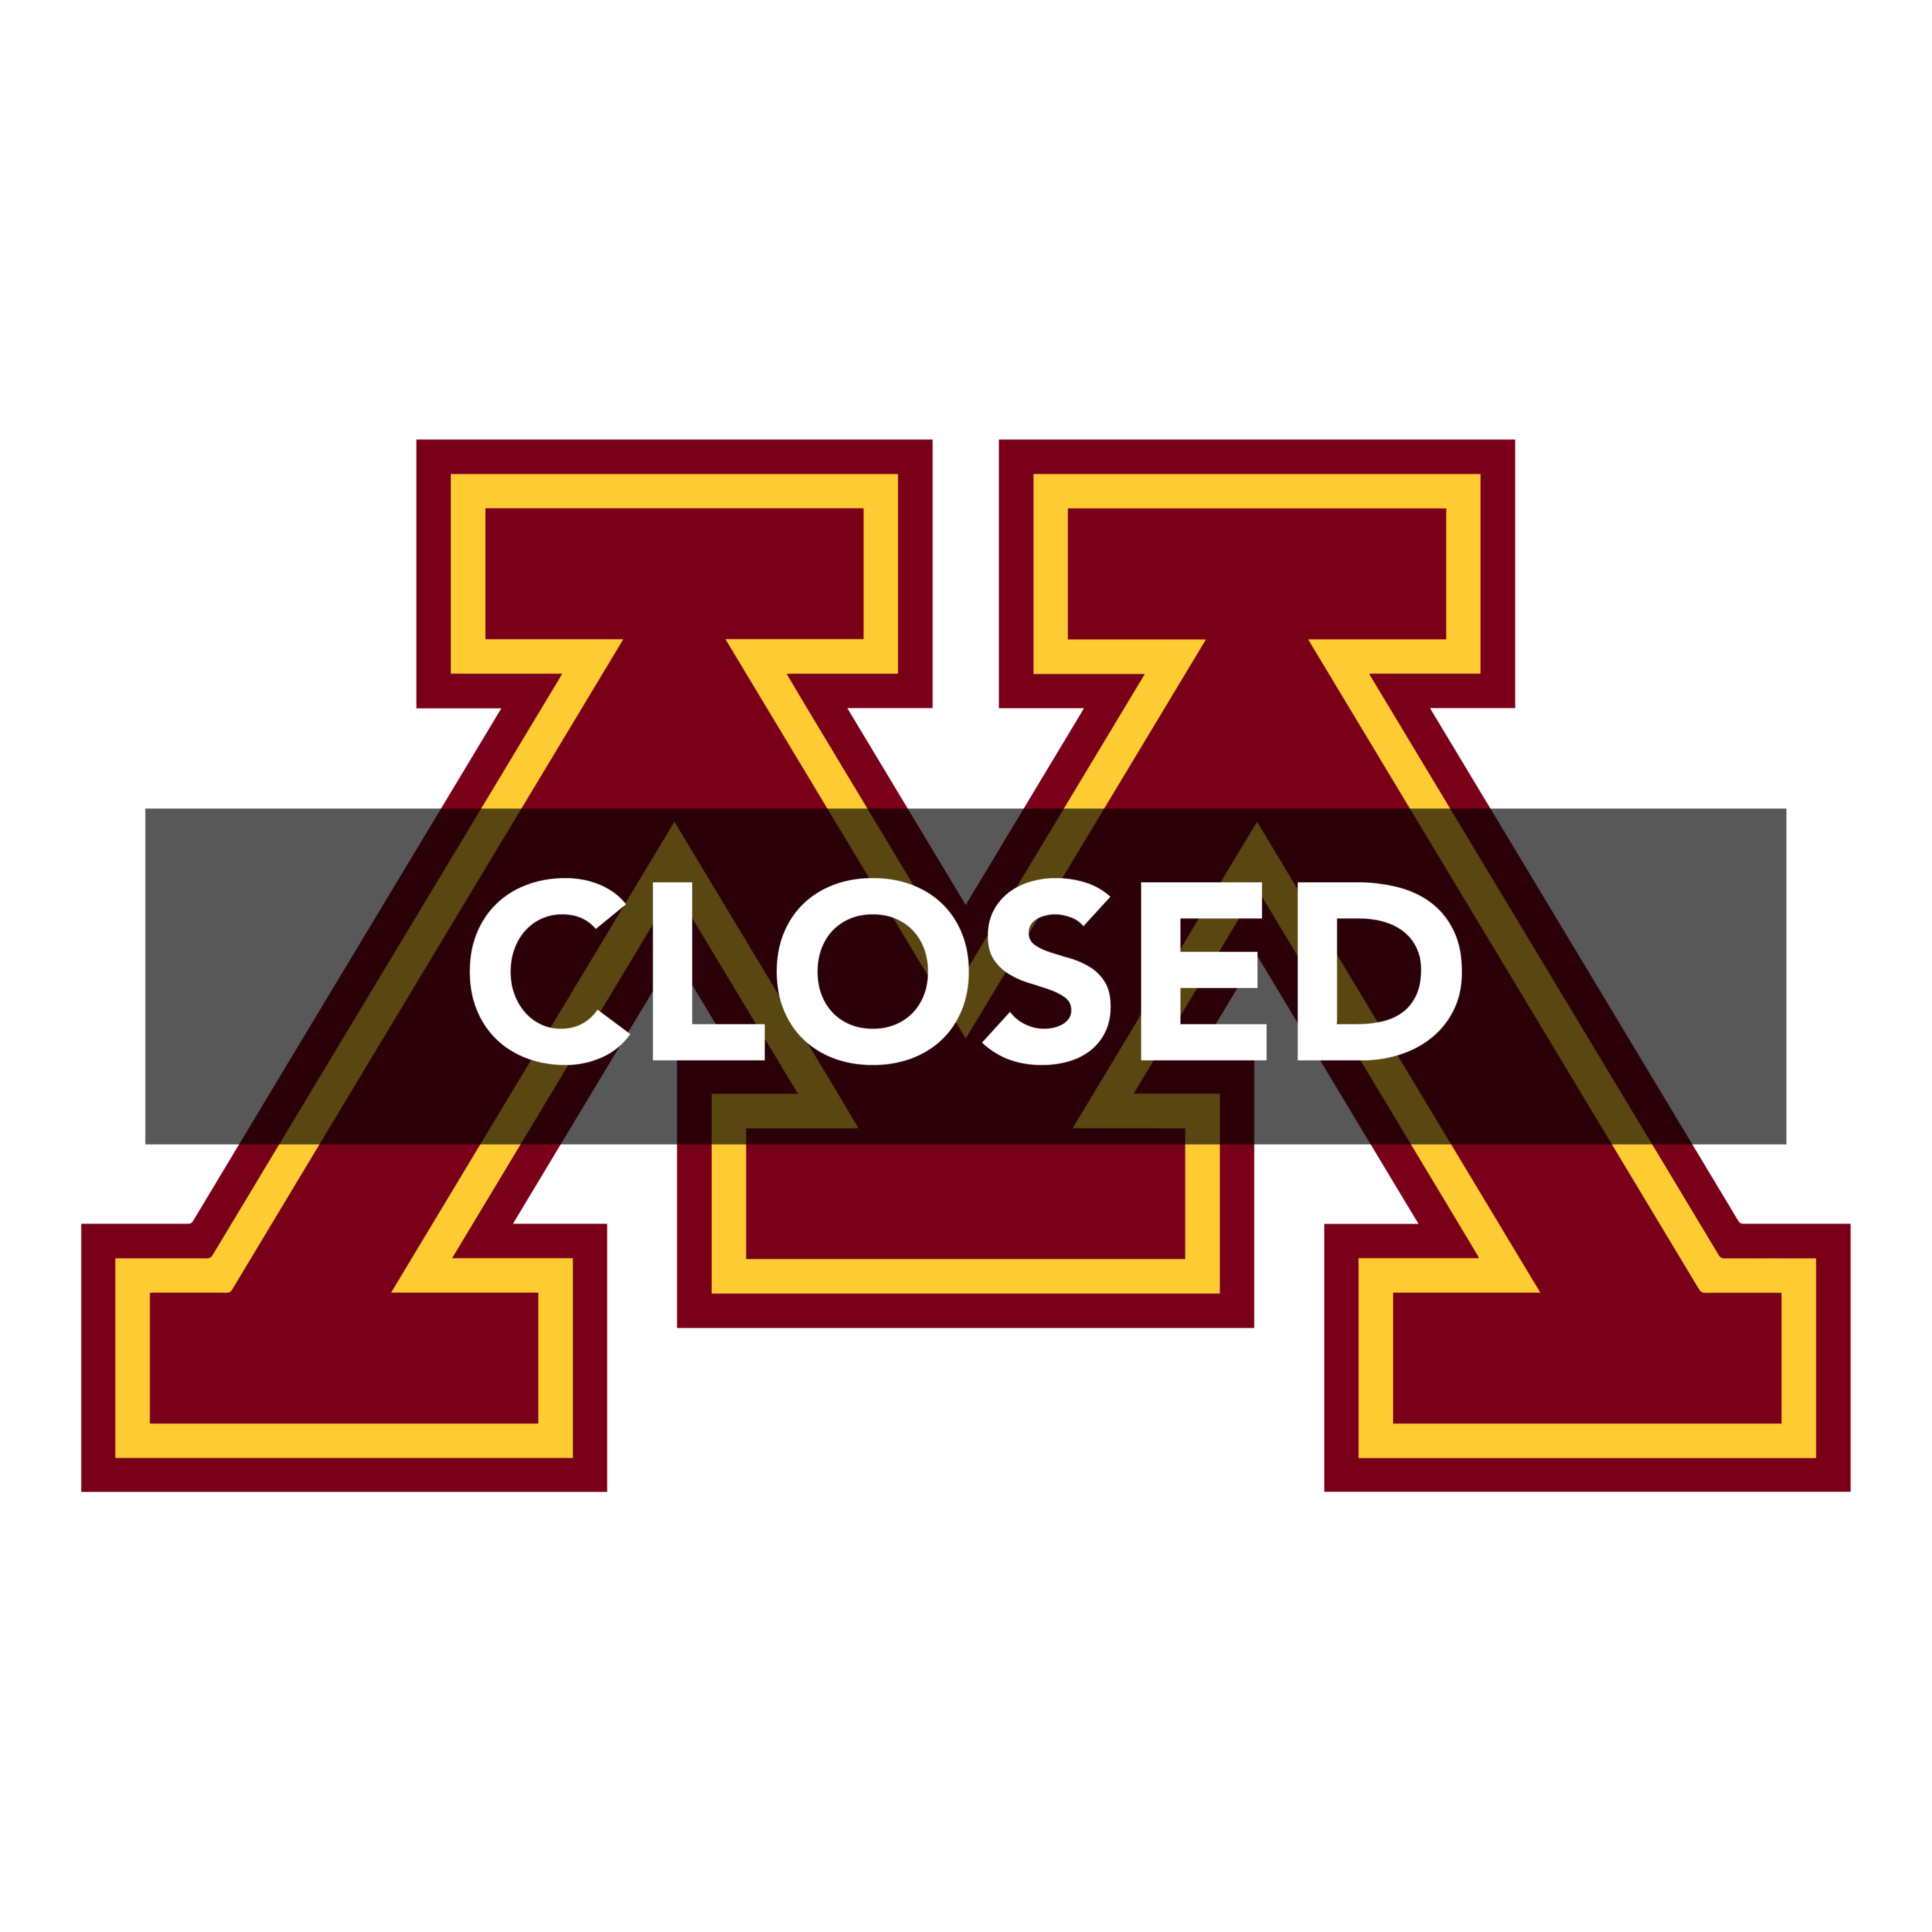 University of Minnesota logo